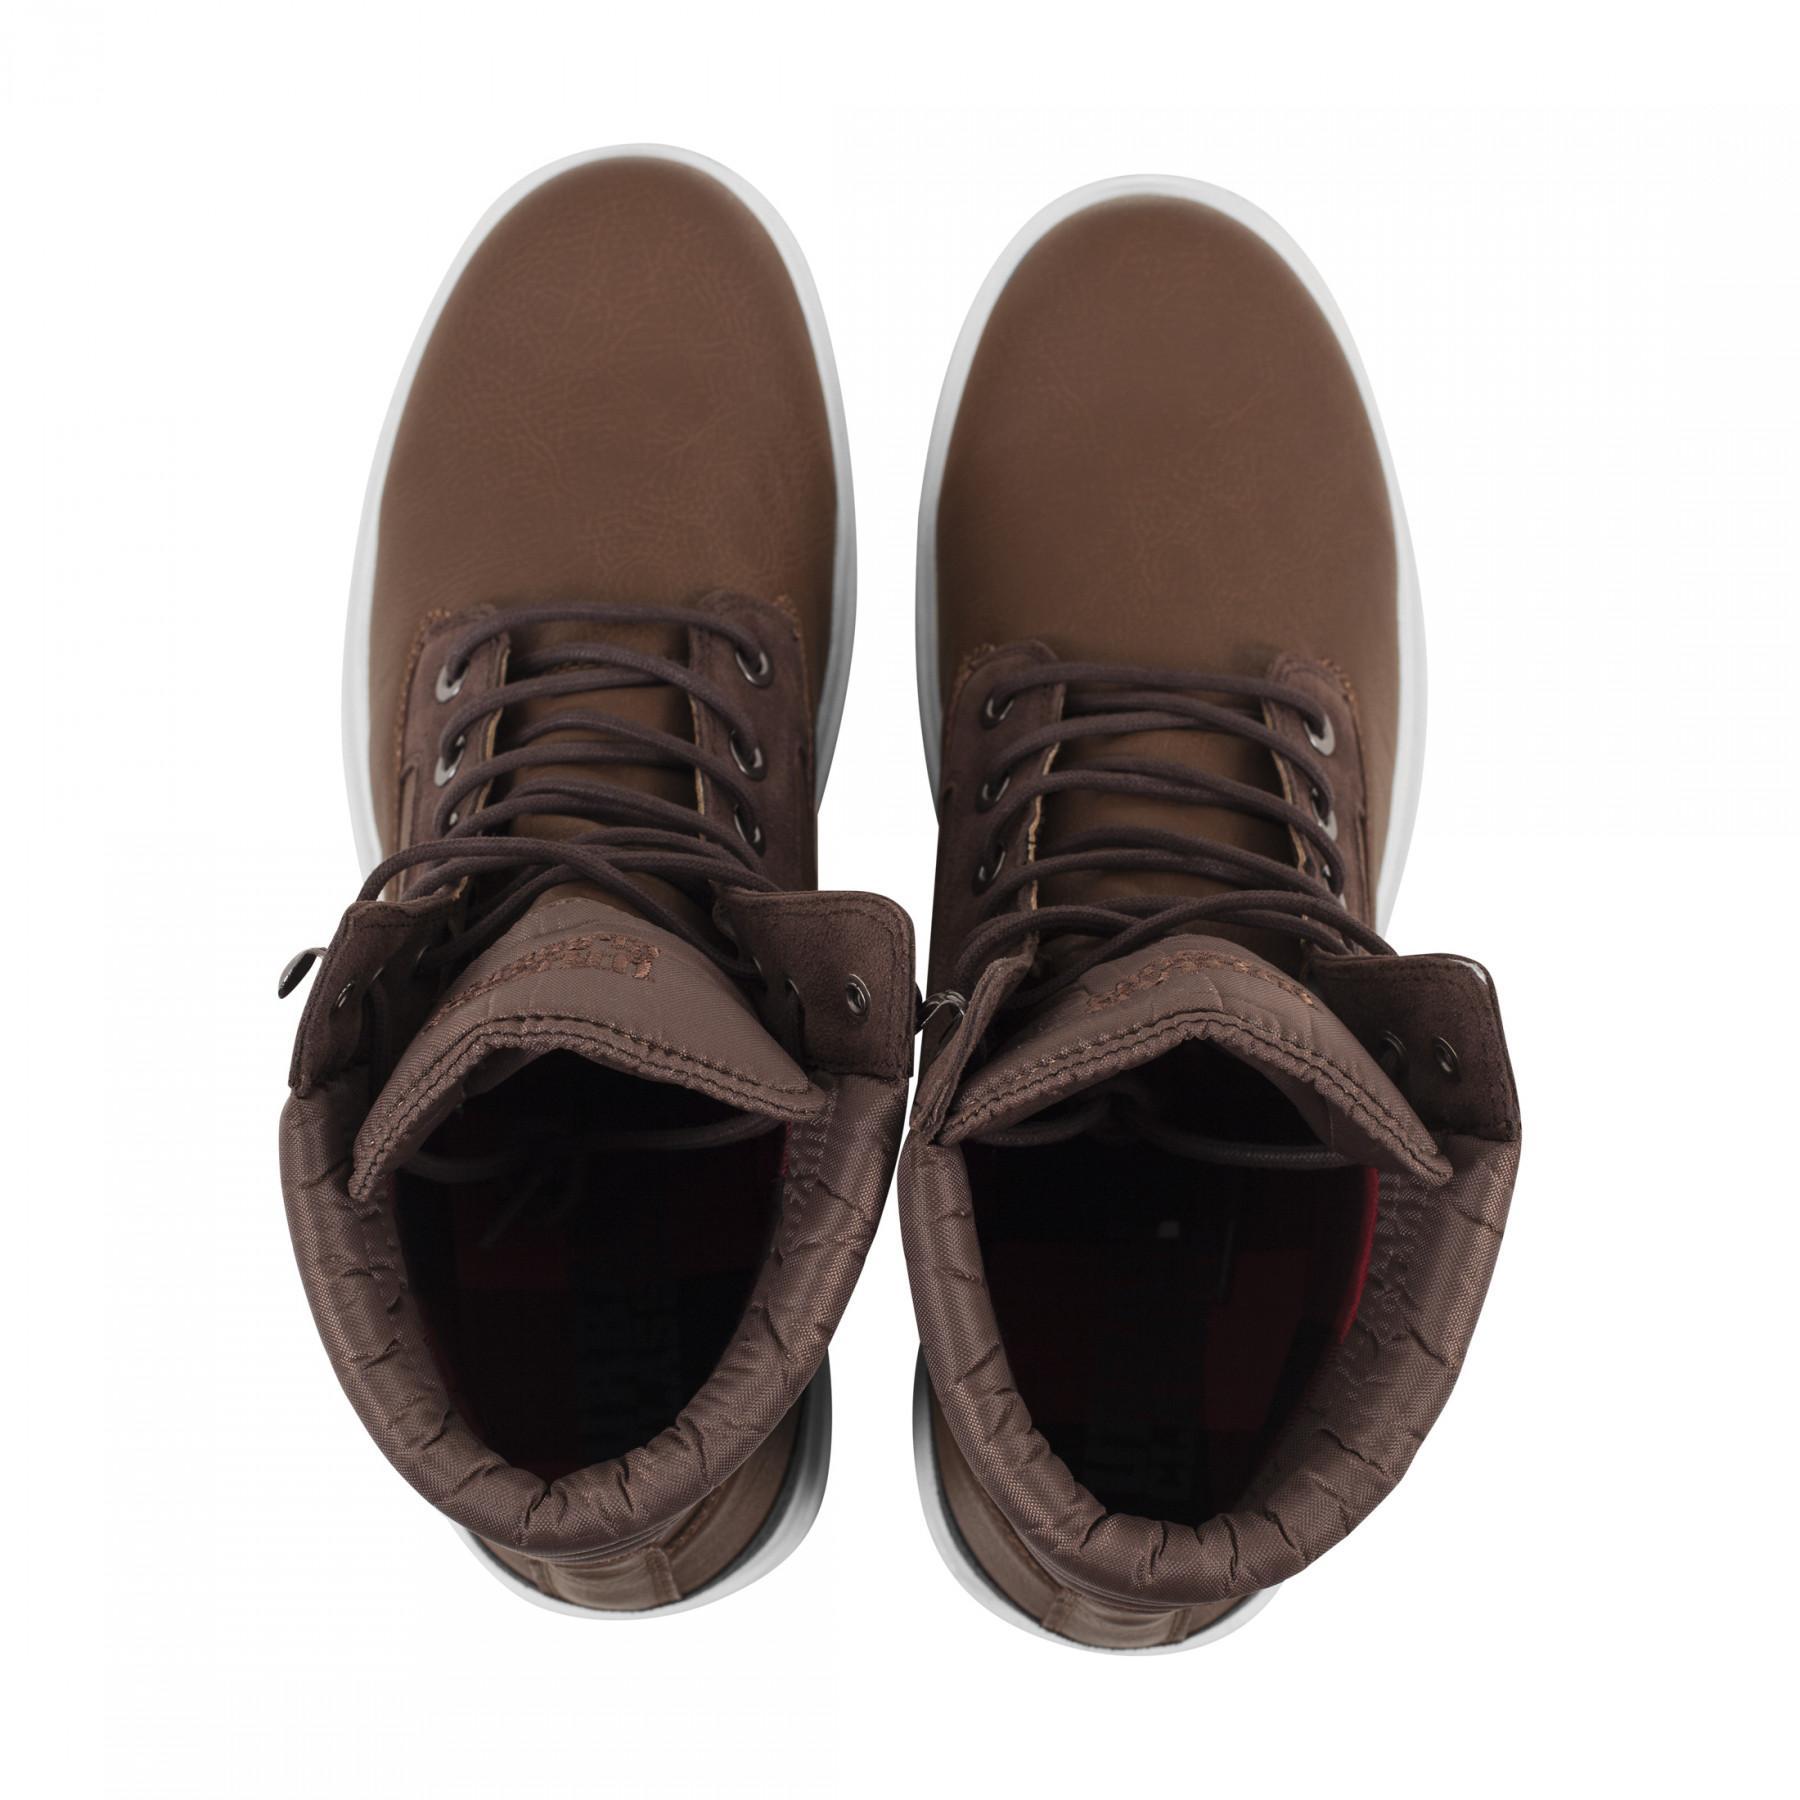 Urban Classic winter boots